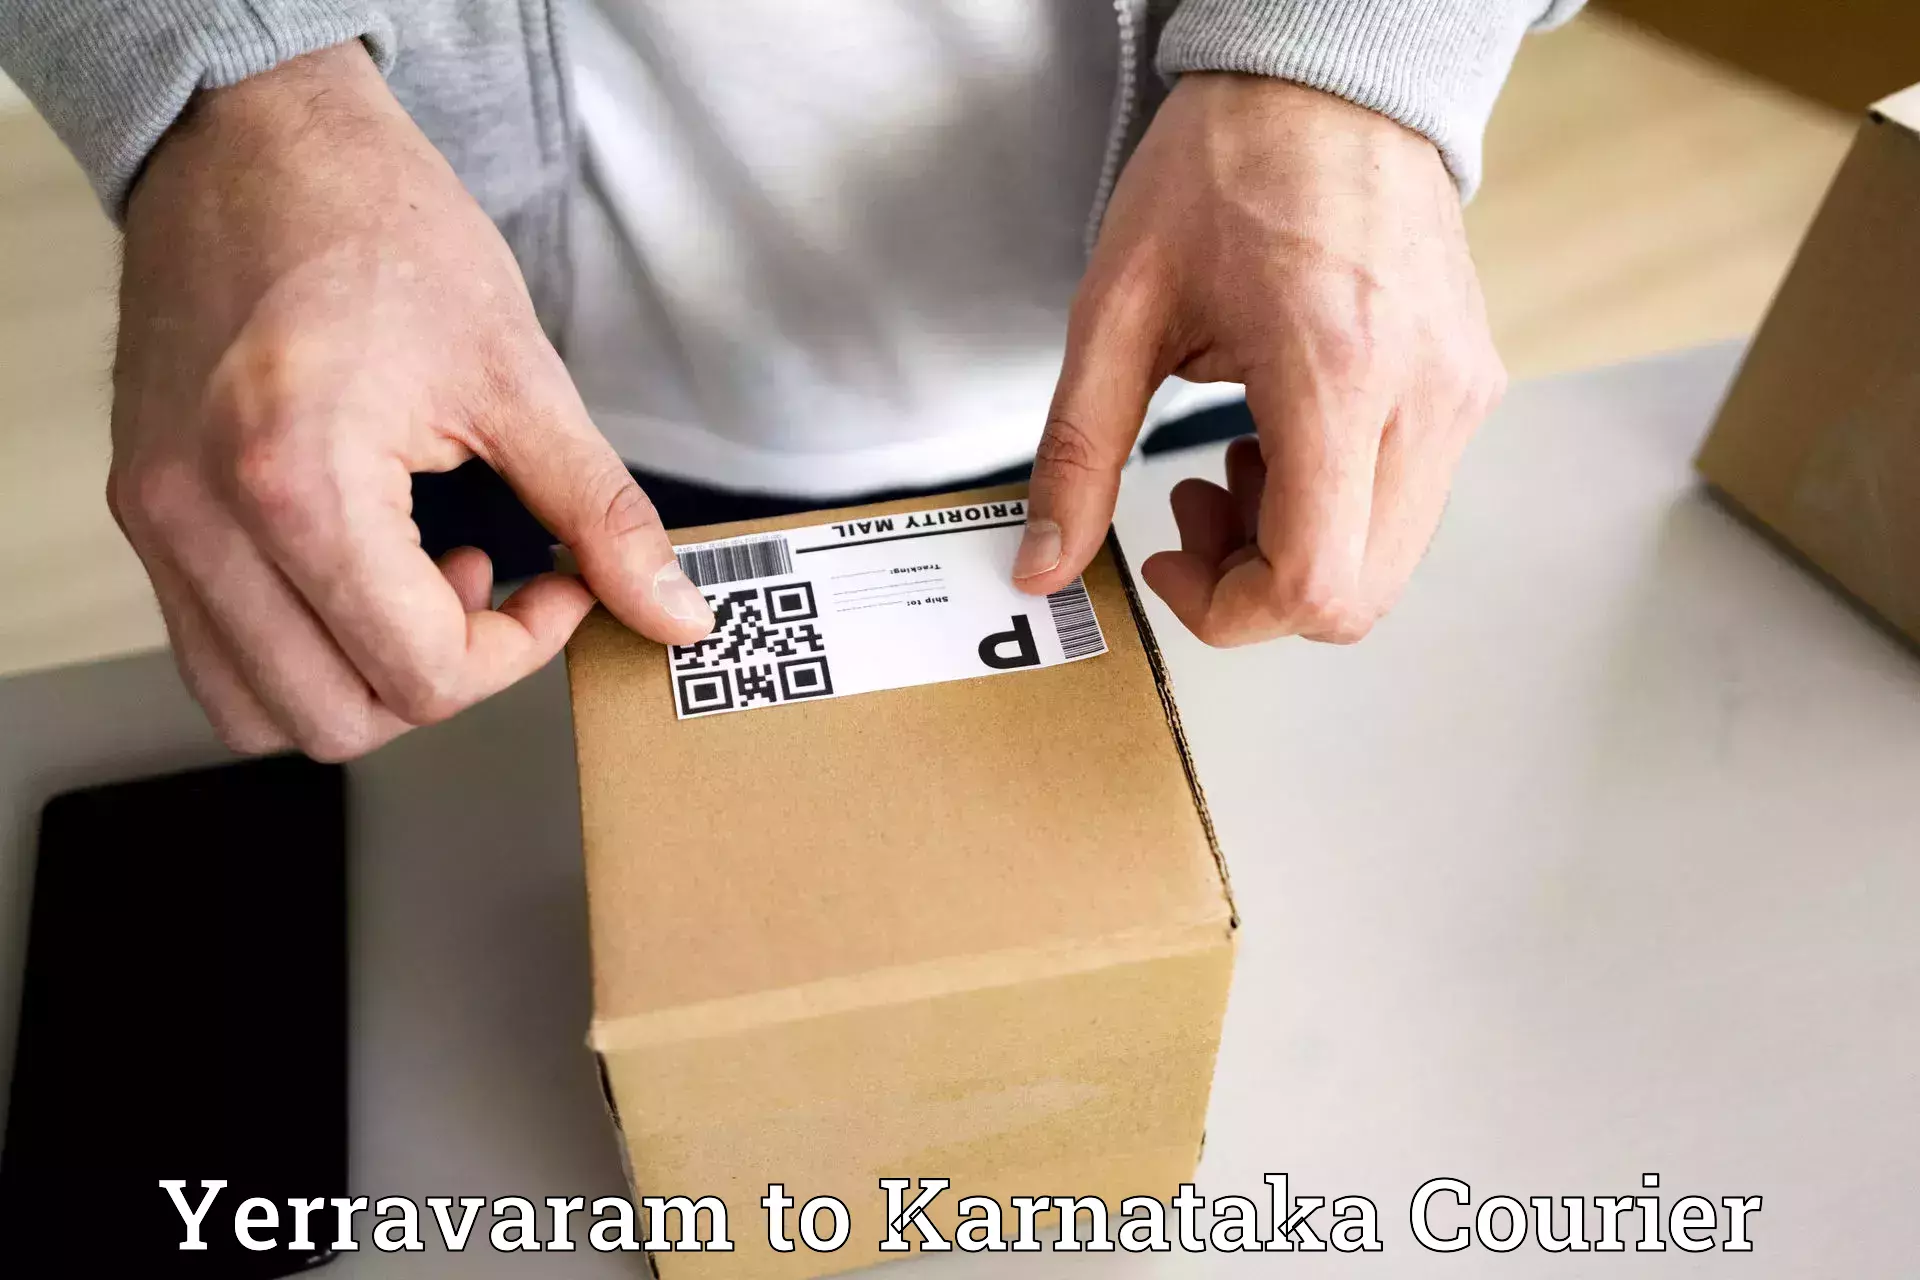 Courier service comparison Yerravaram to Alnavar